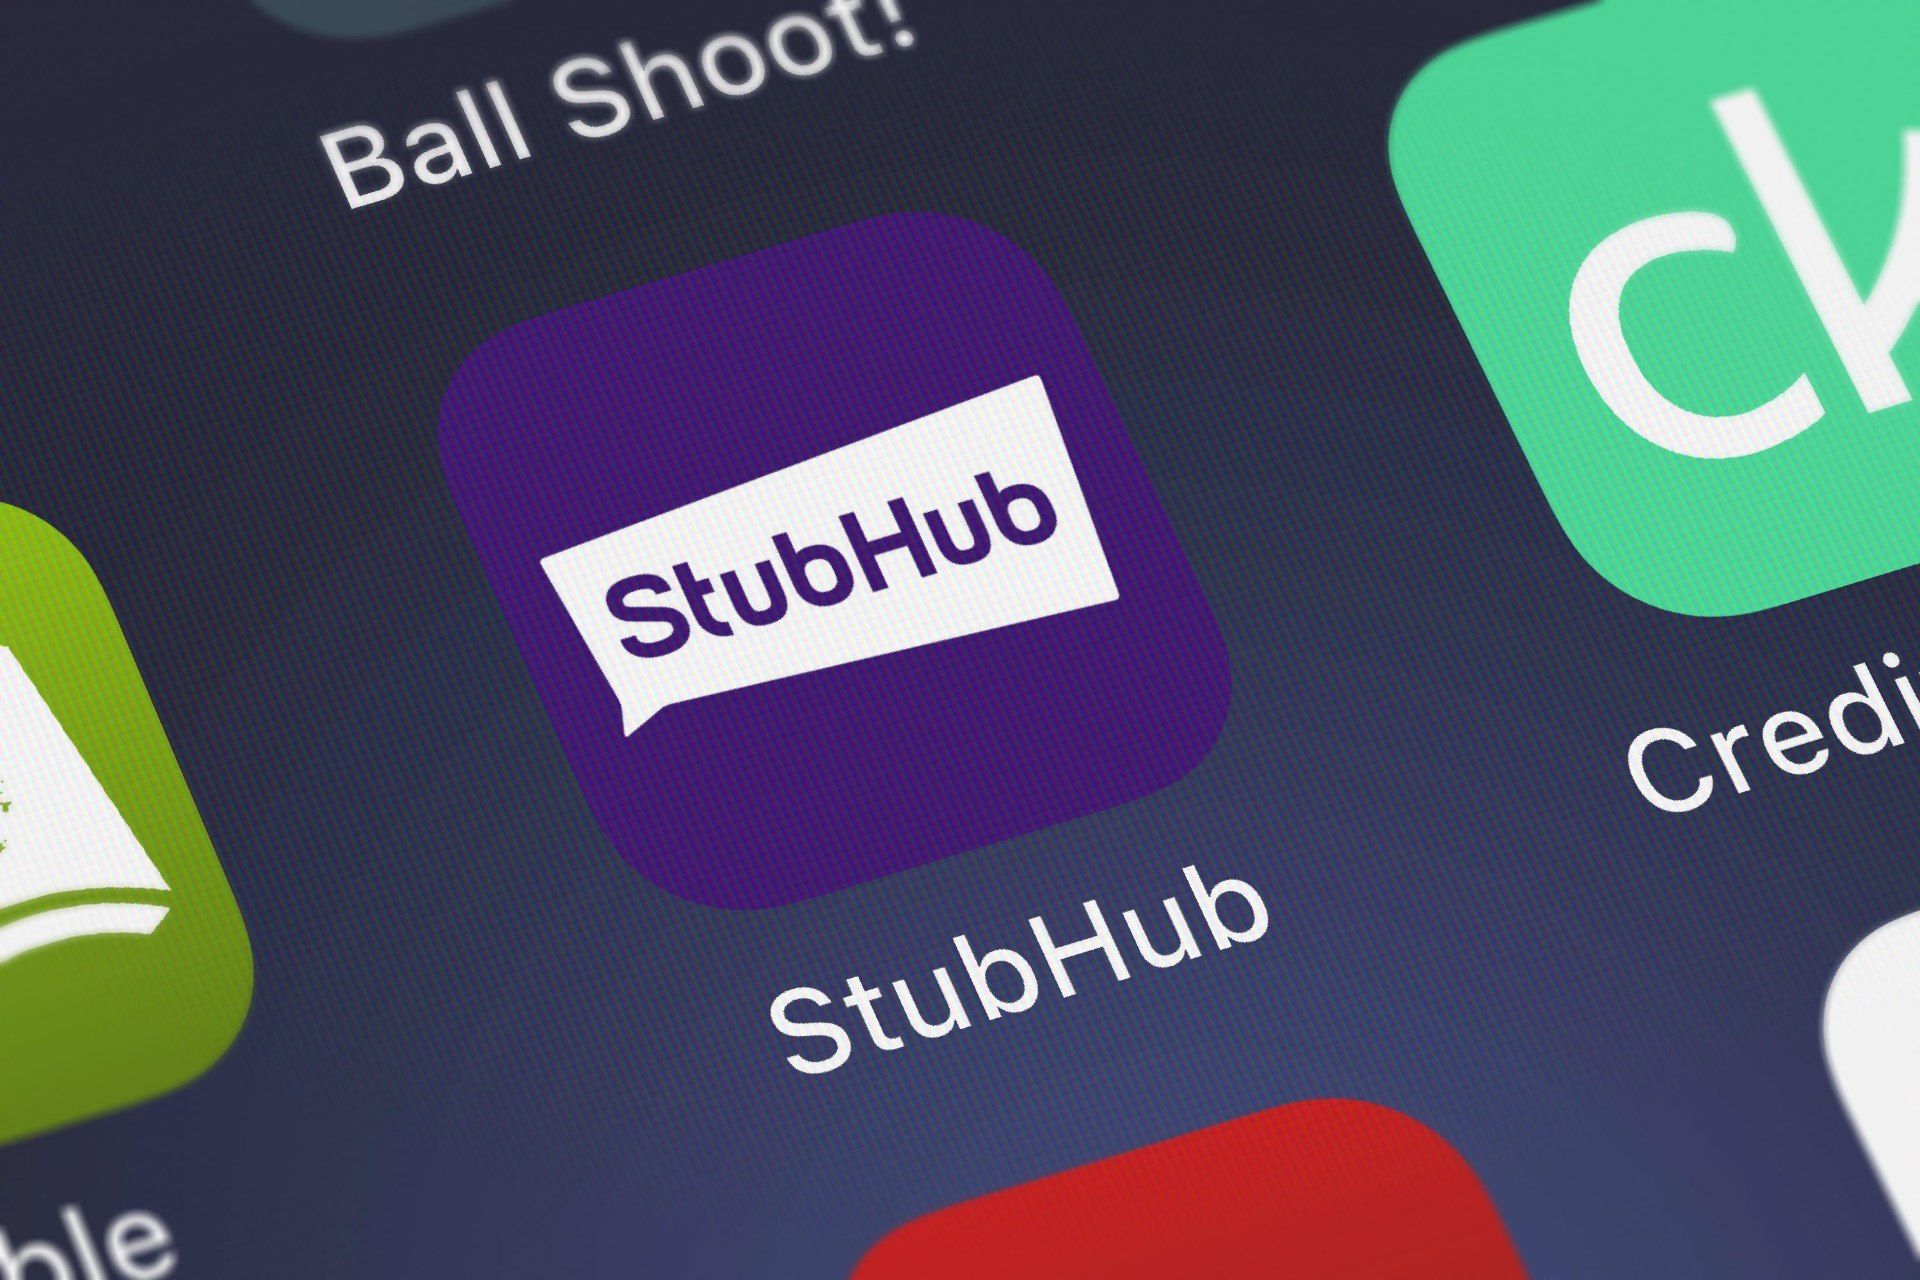 Screen shows StubHub app